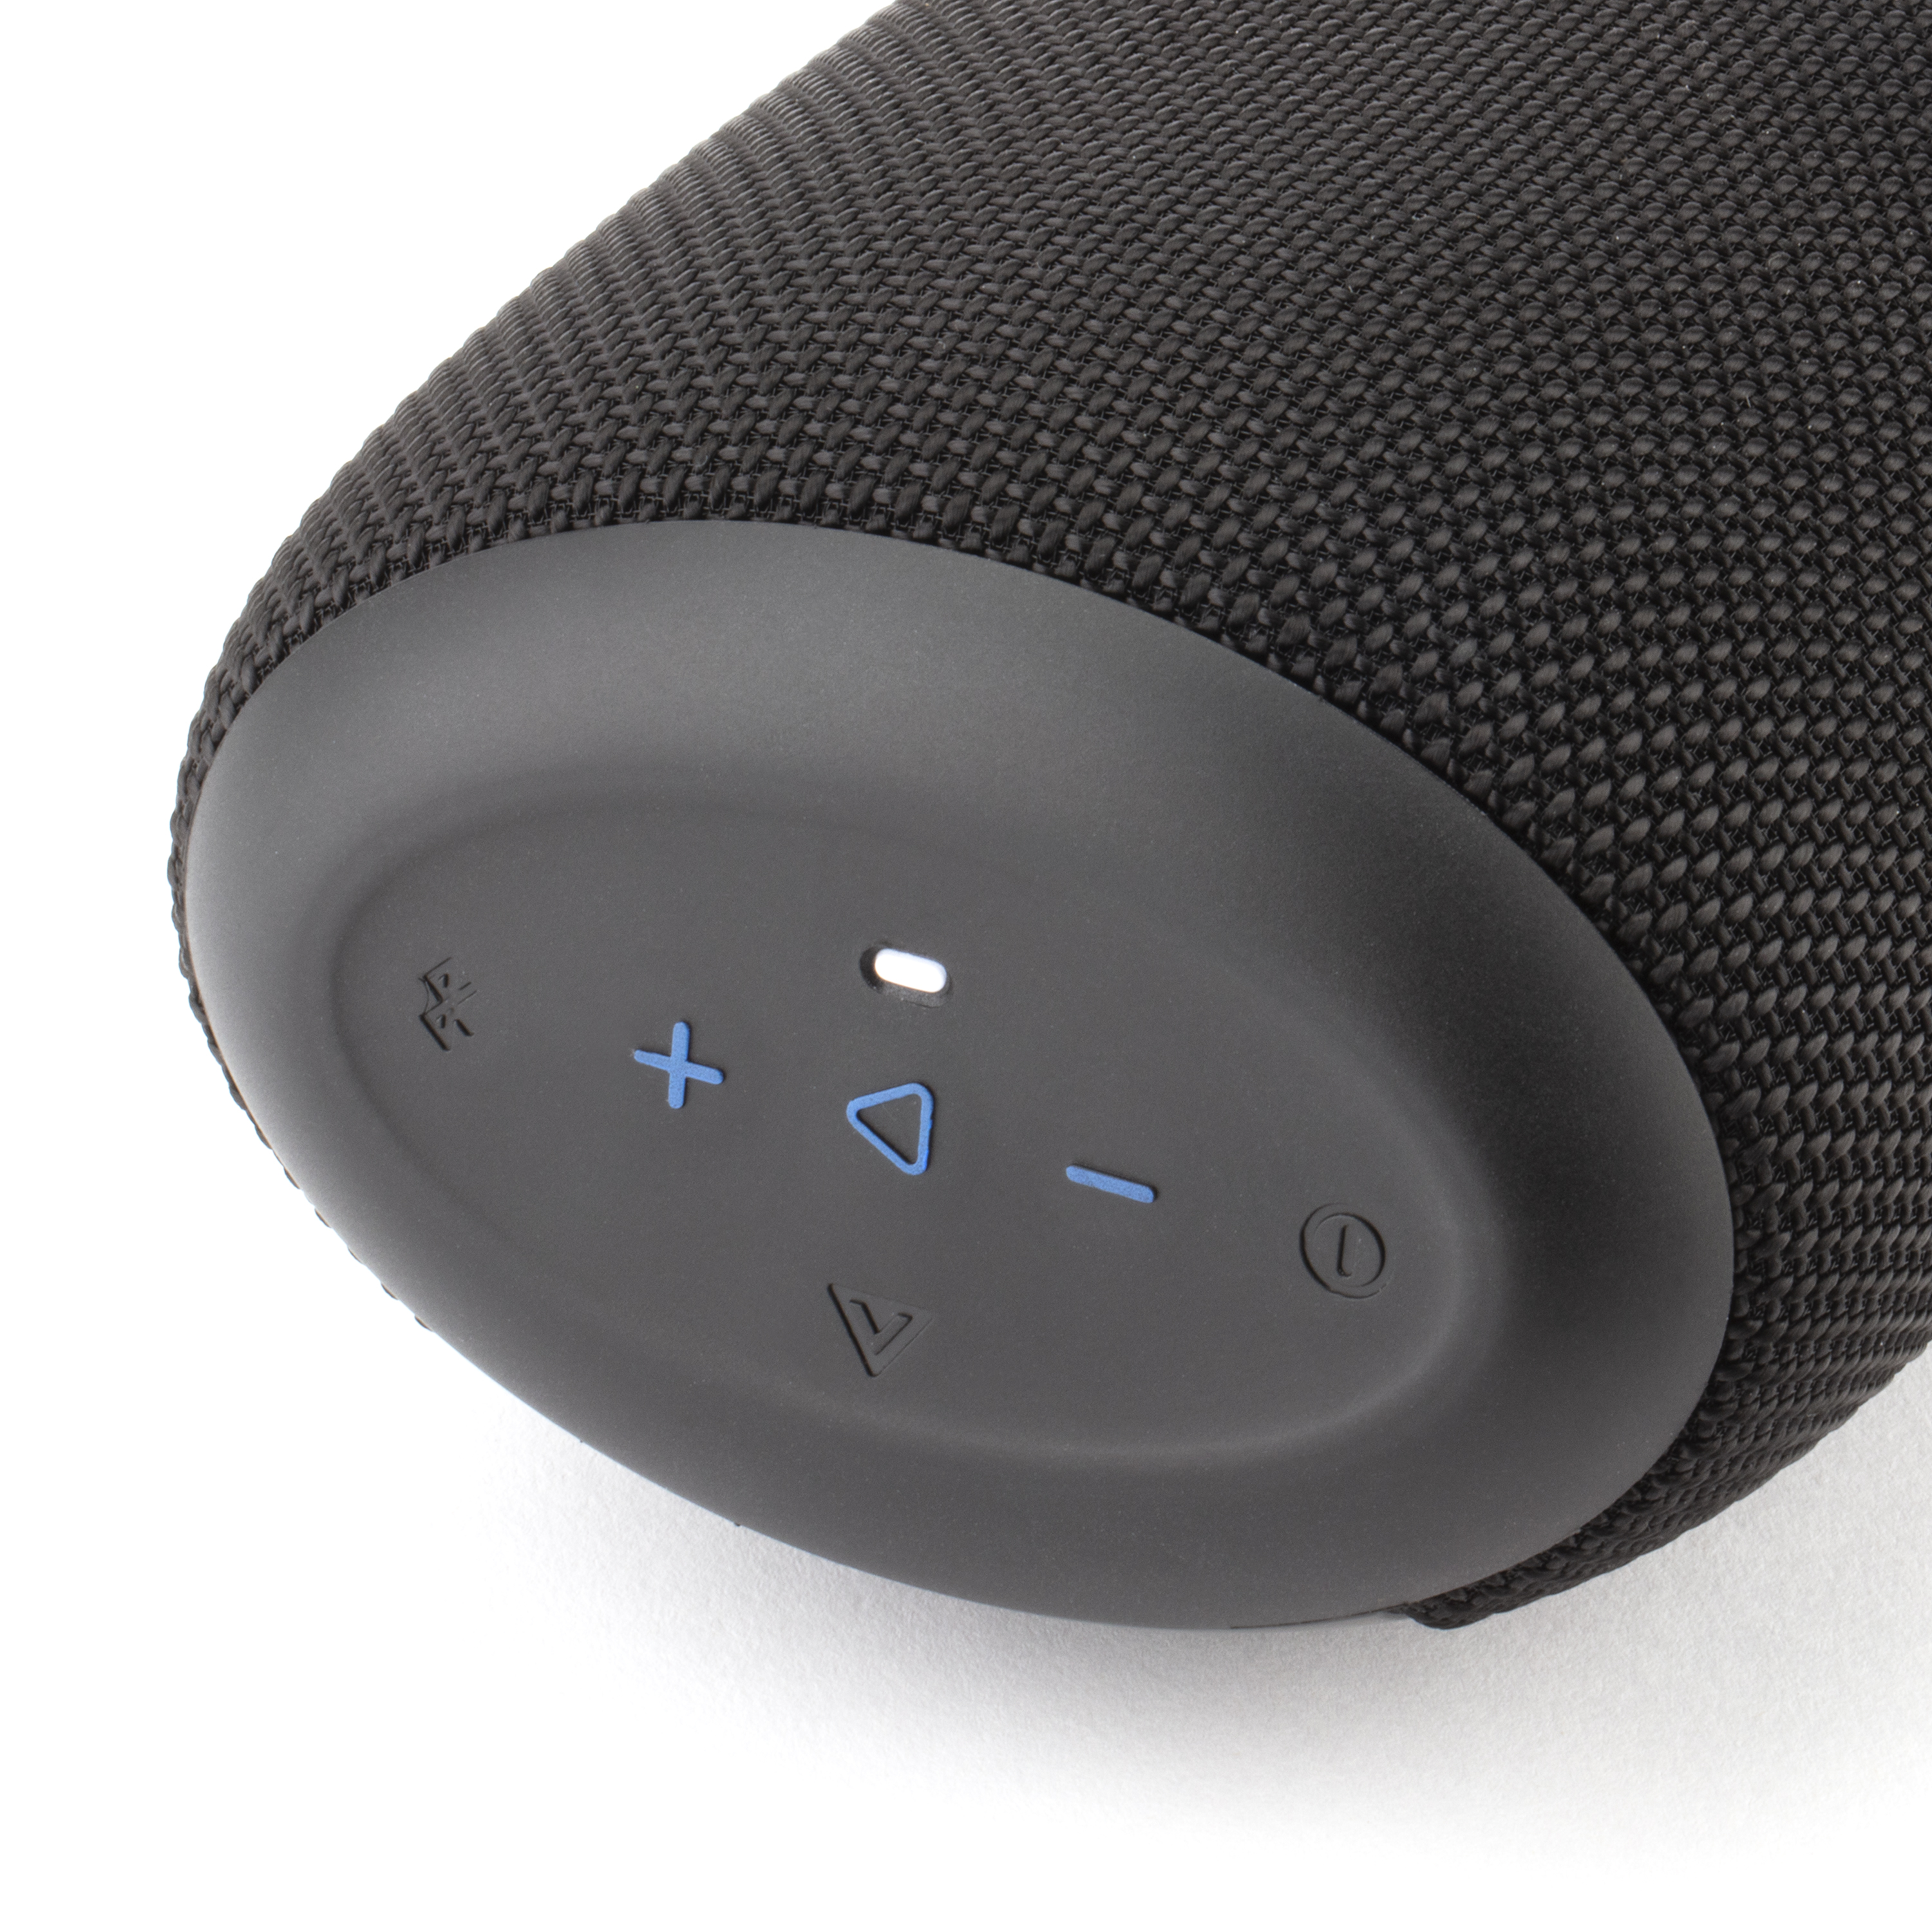 iHome PLAYPRO Portable Bluetooth Speaker, Black, iBT700 - image 3 of 8